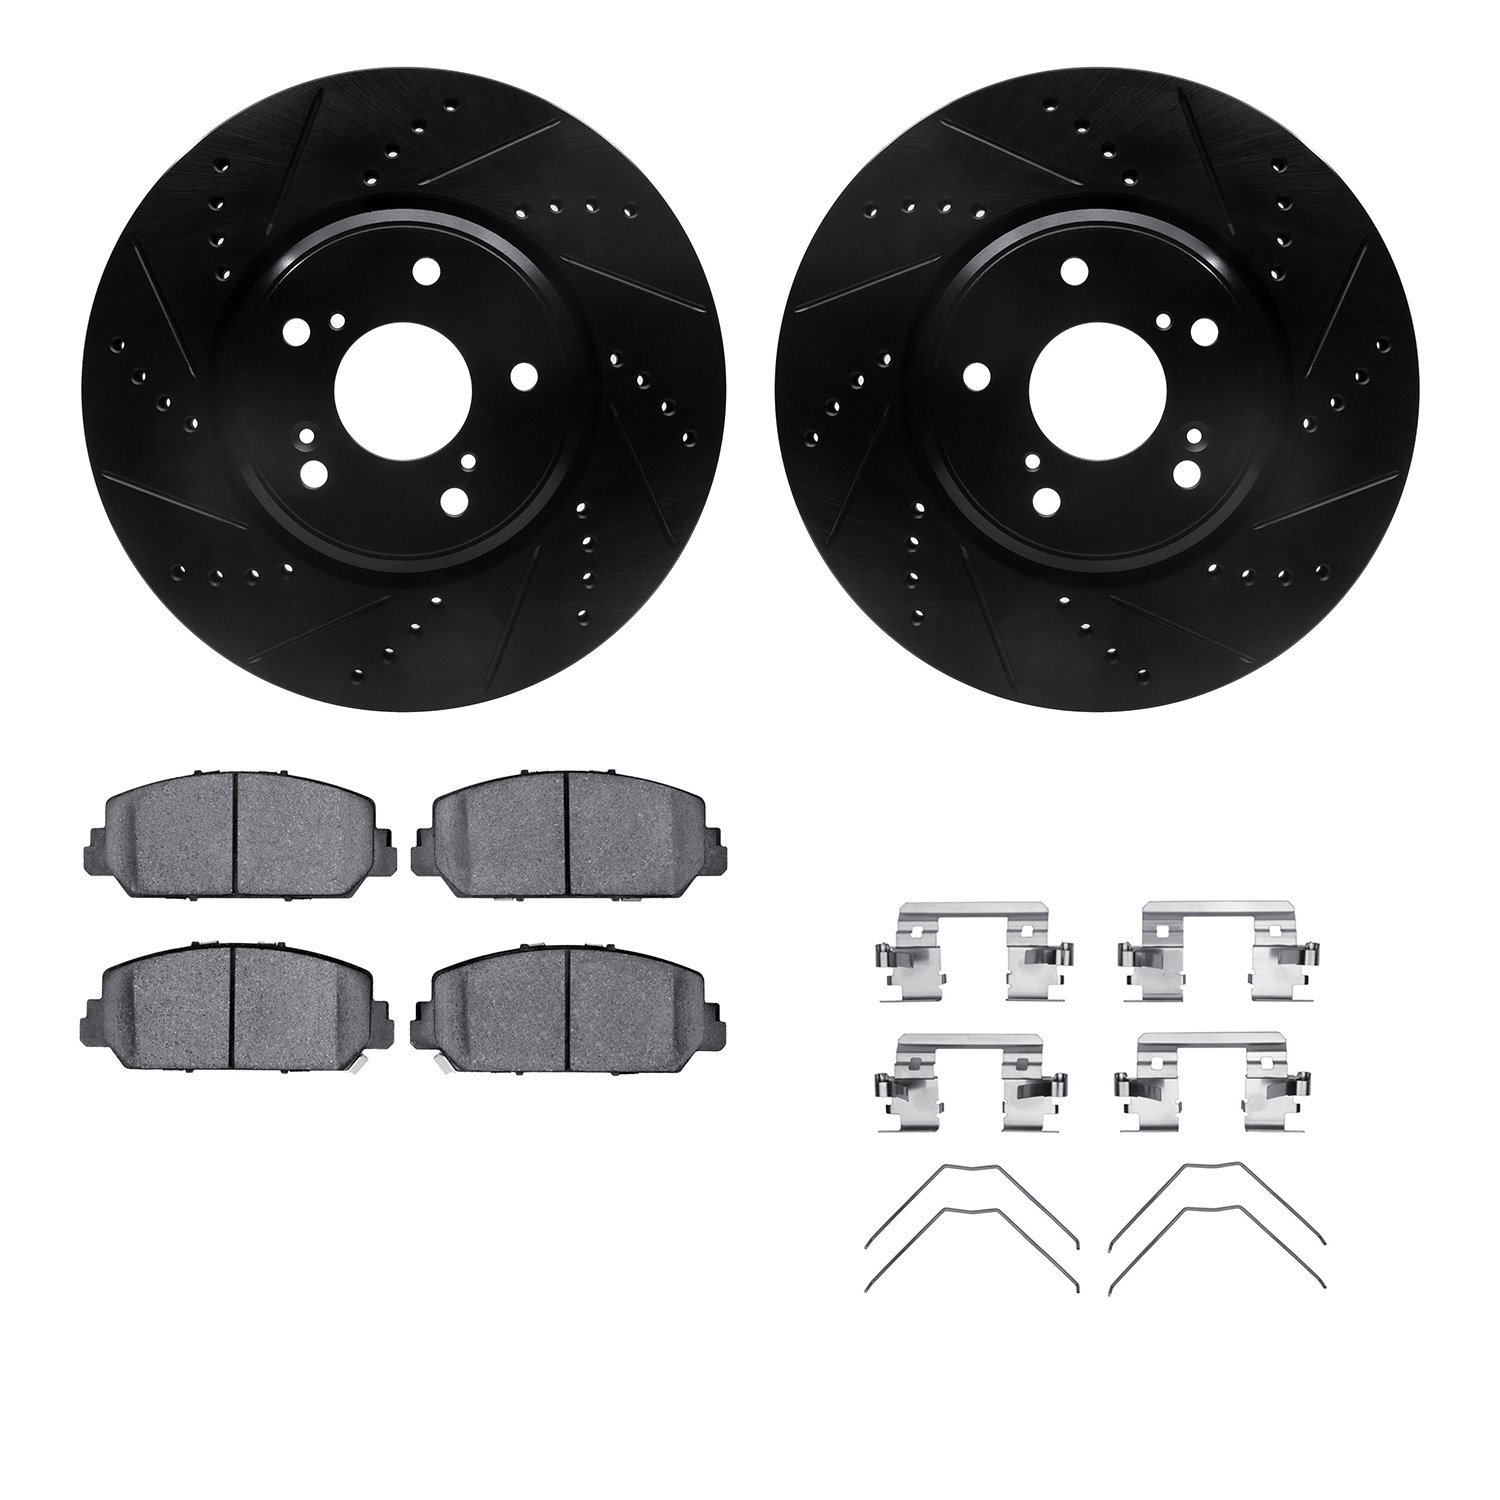 8312-59098 Drilled/Slotted Brake Rotors with 3000-Series Ceramic Brake Pads Kit & Hardware [Black], Fits Select Acura/Honda, Pos